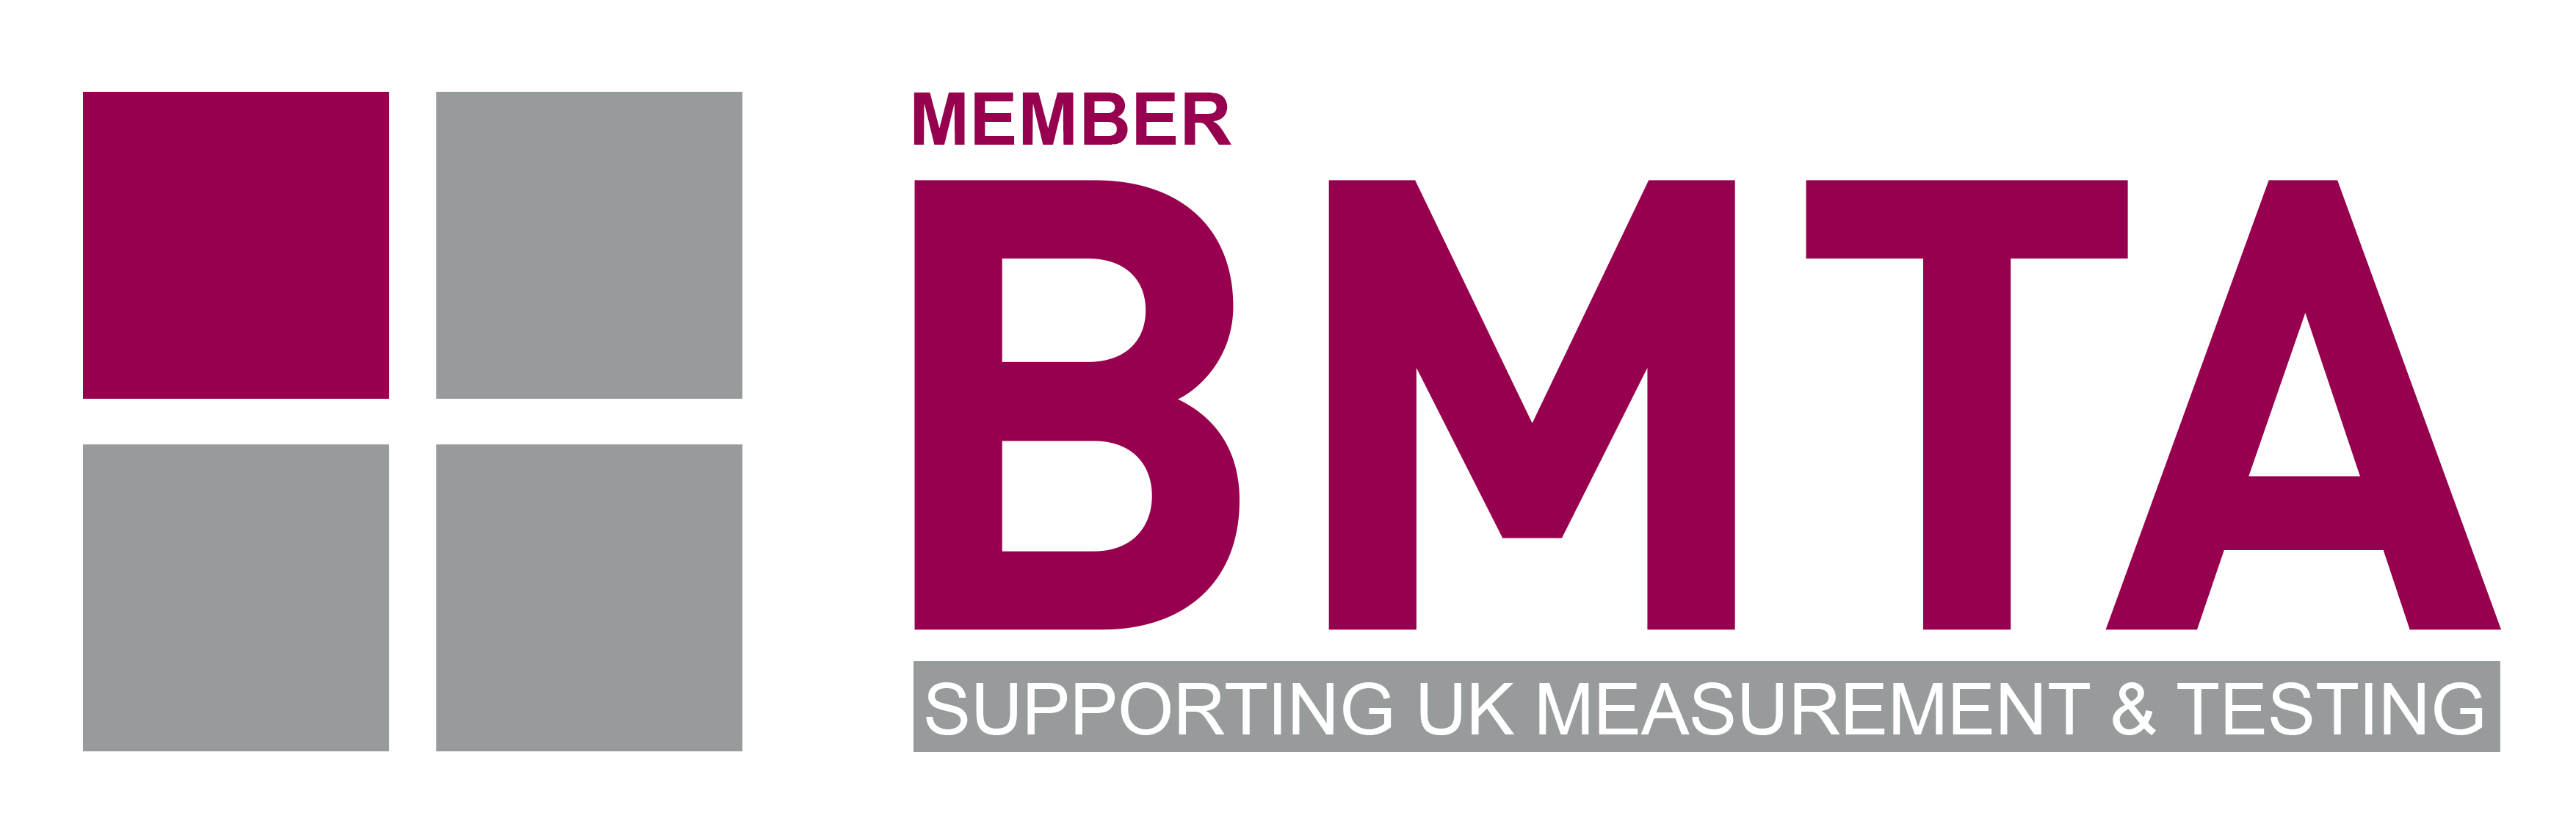 BMTA Member Logo 2021